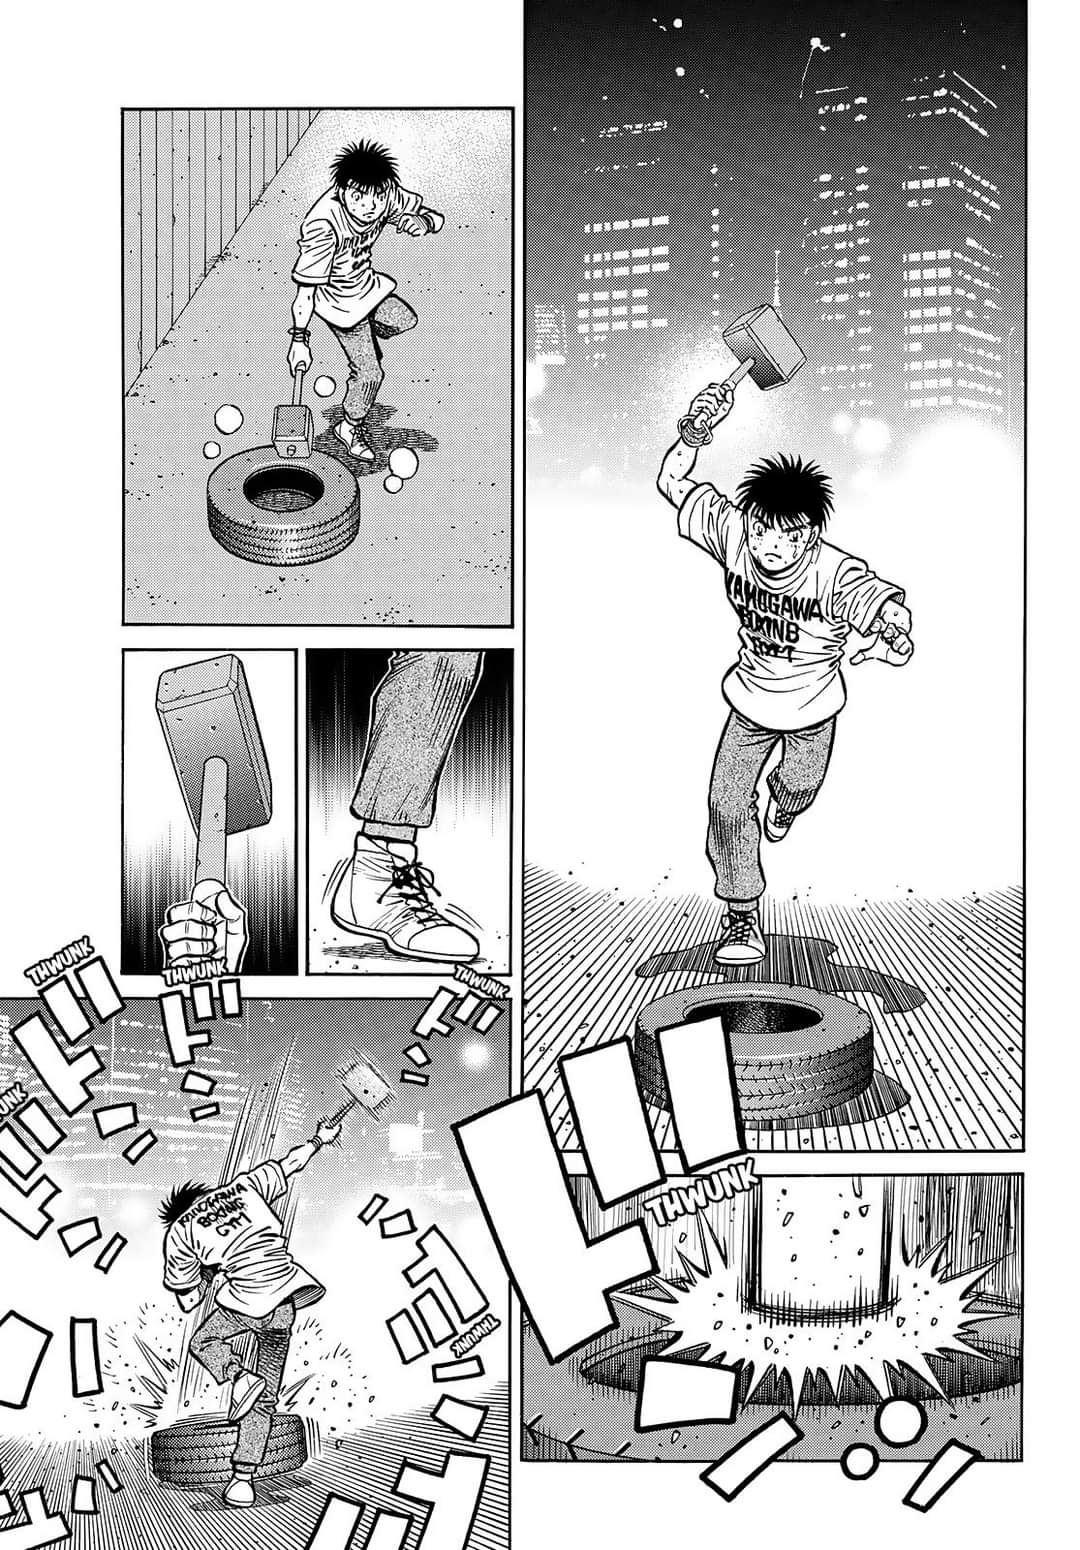 Hajime no Ippo Manga 1437 Español AnimeAllStar / Manga Online